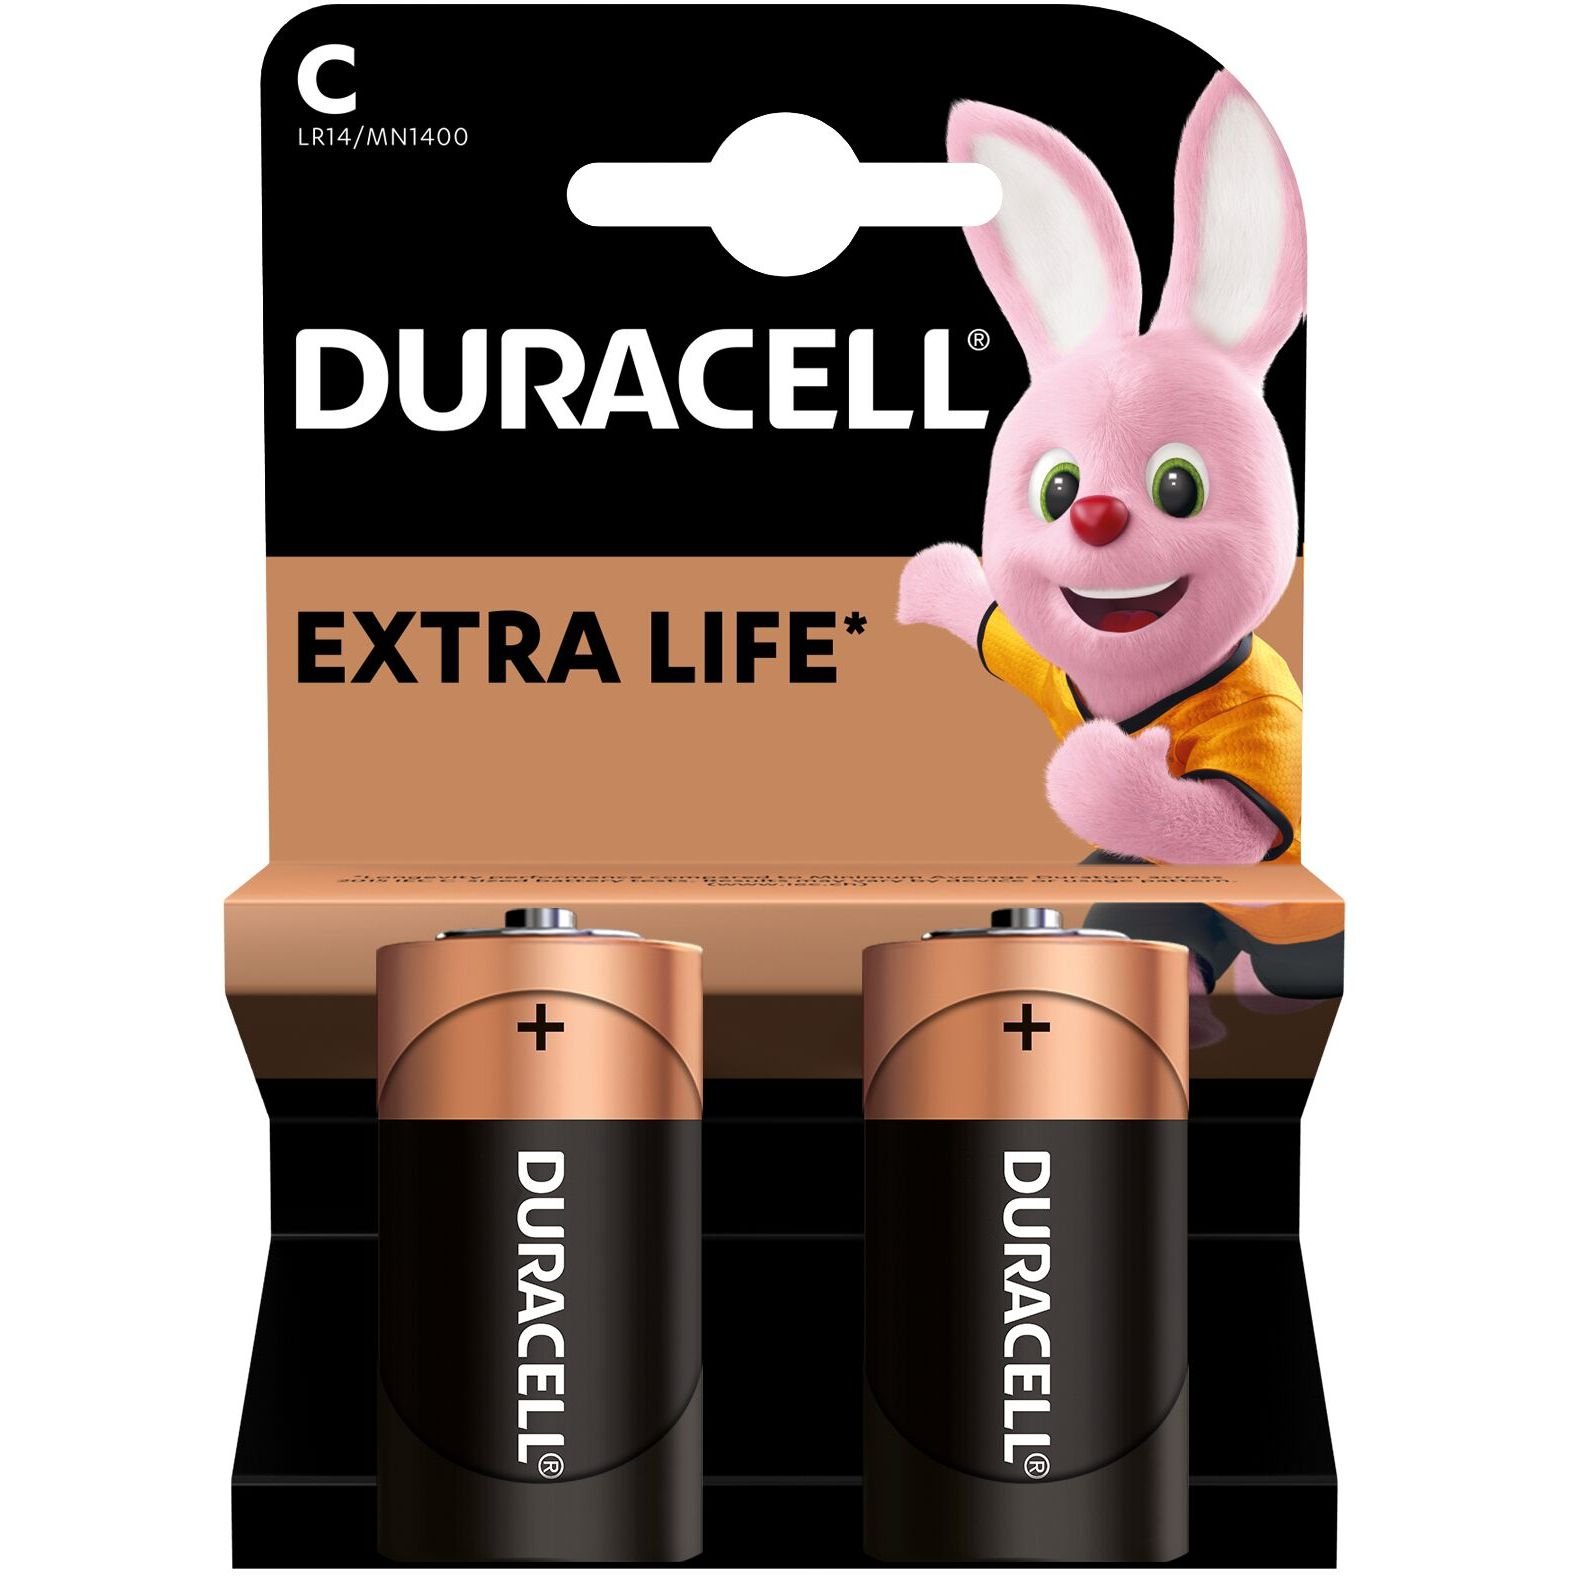 Щелочные батарейки Duracell 1.5 V C LR14/MN1400, 2 шт. (706009) - фото 2